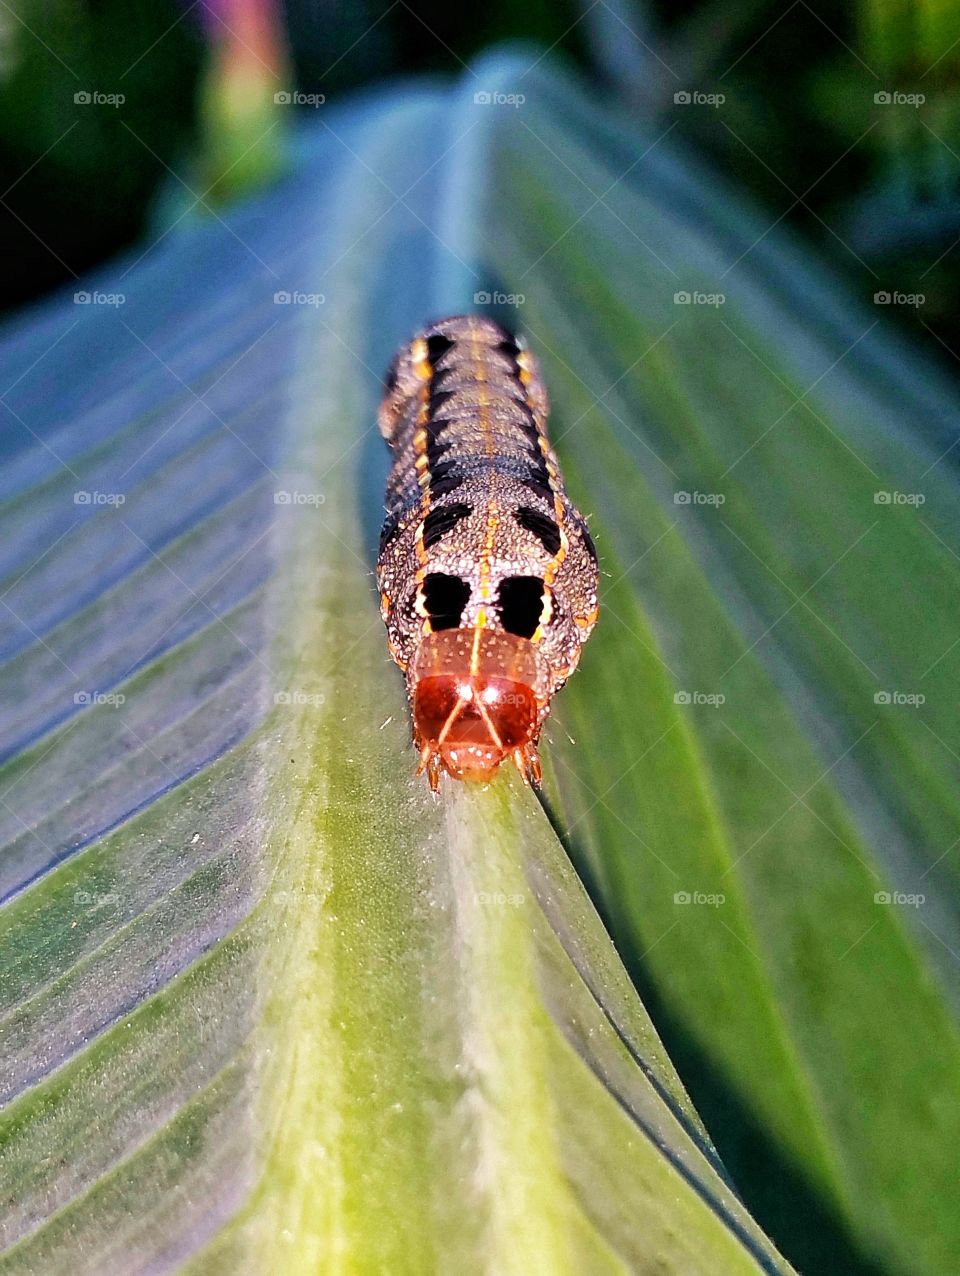 caterpillar worm on banana tree leaf outdoors